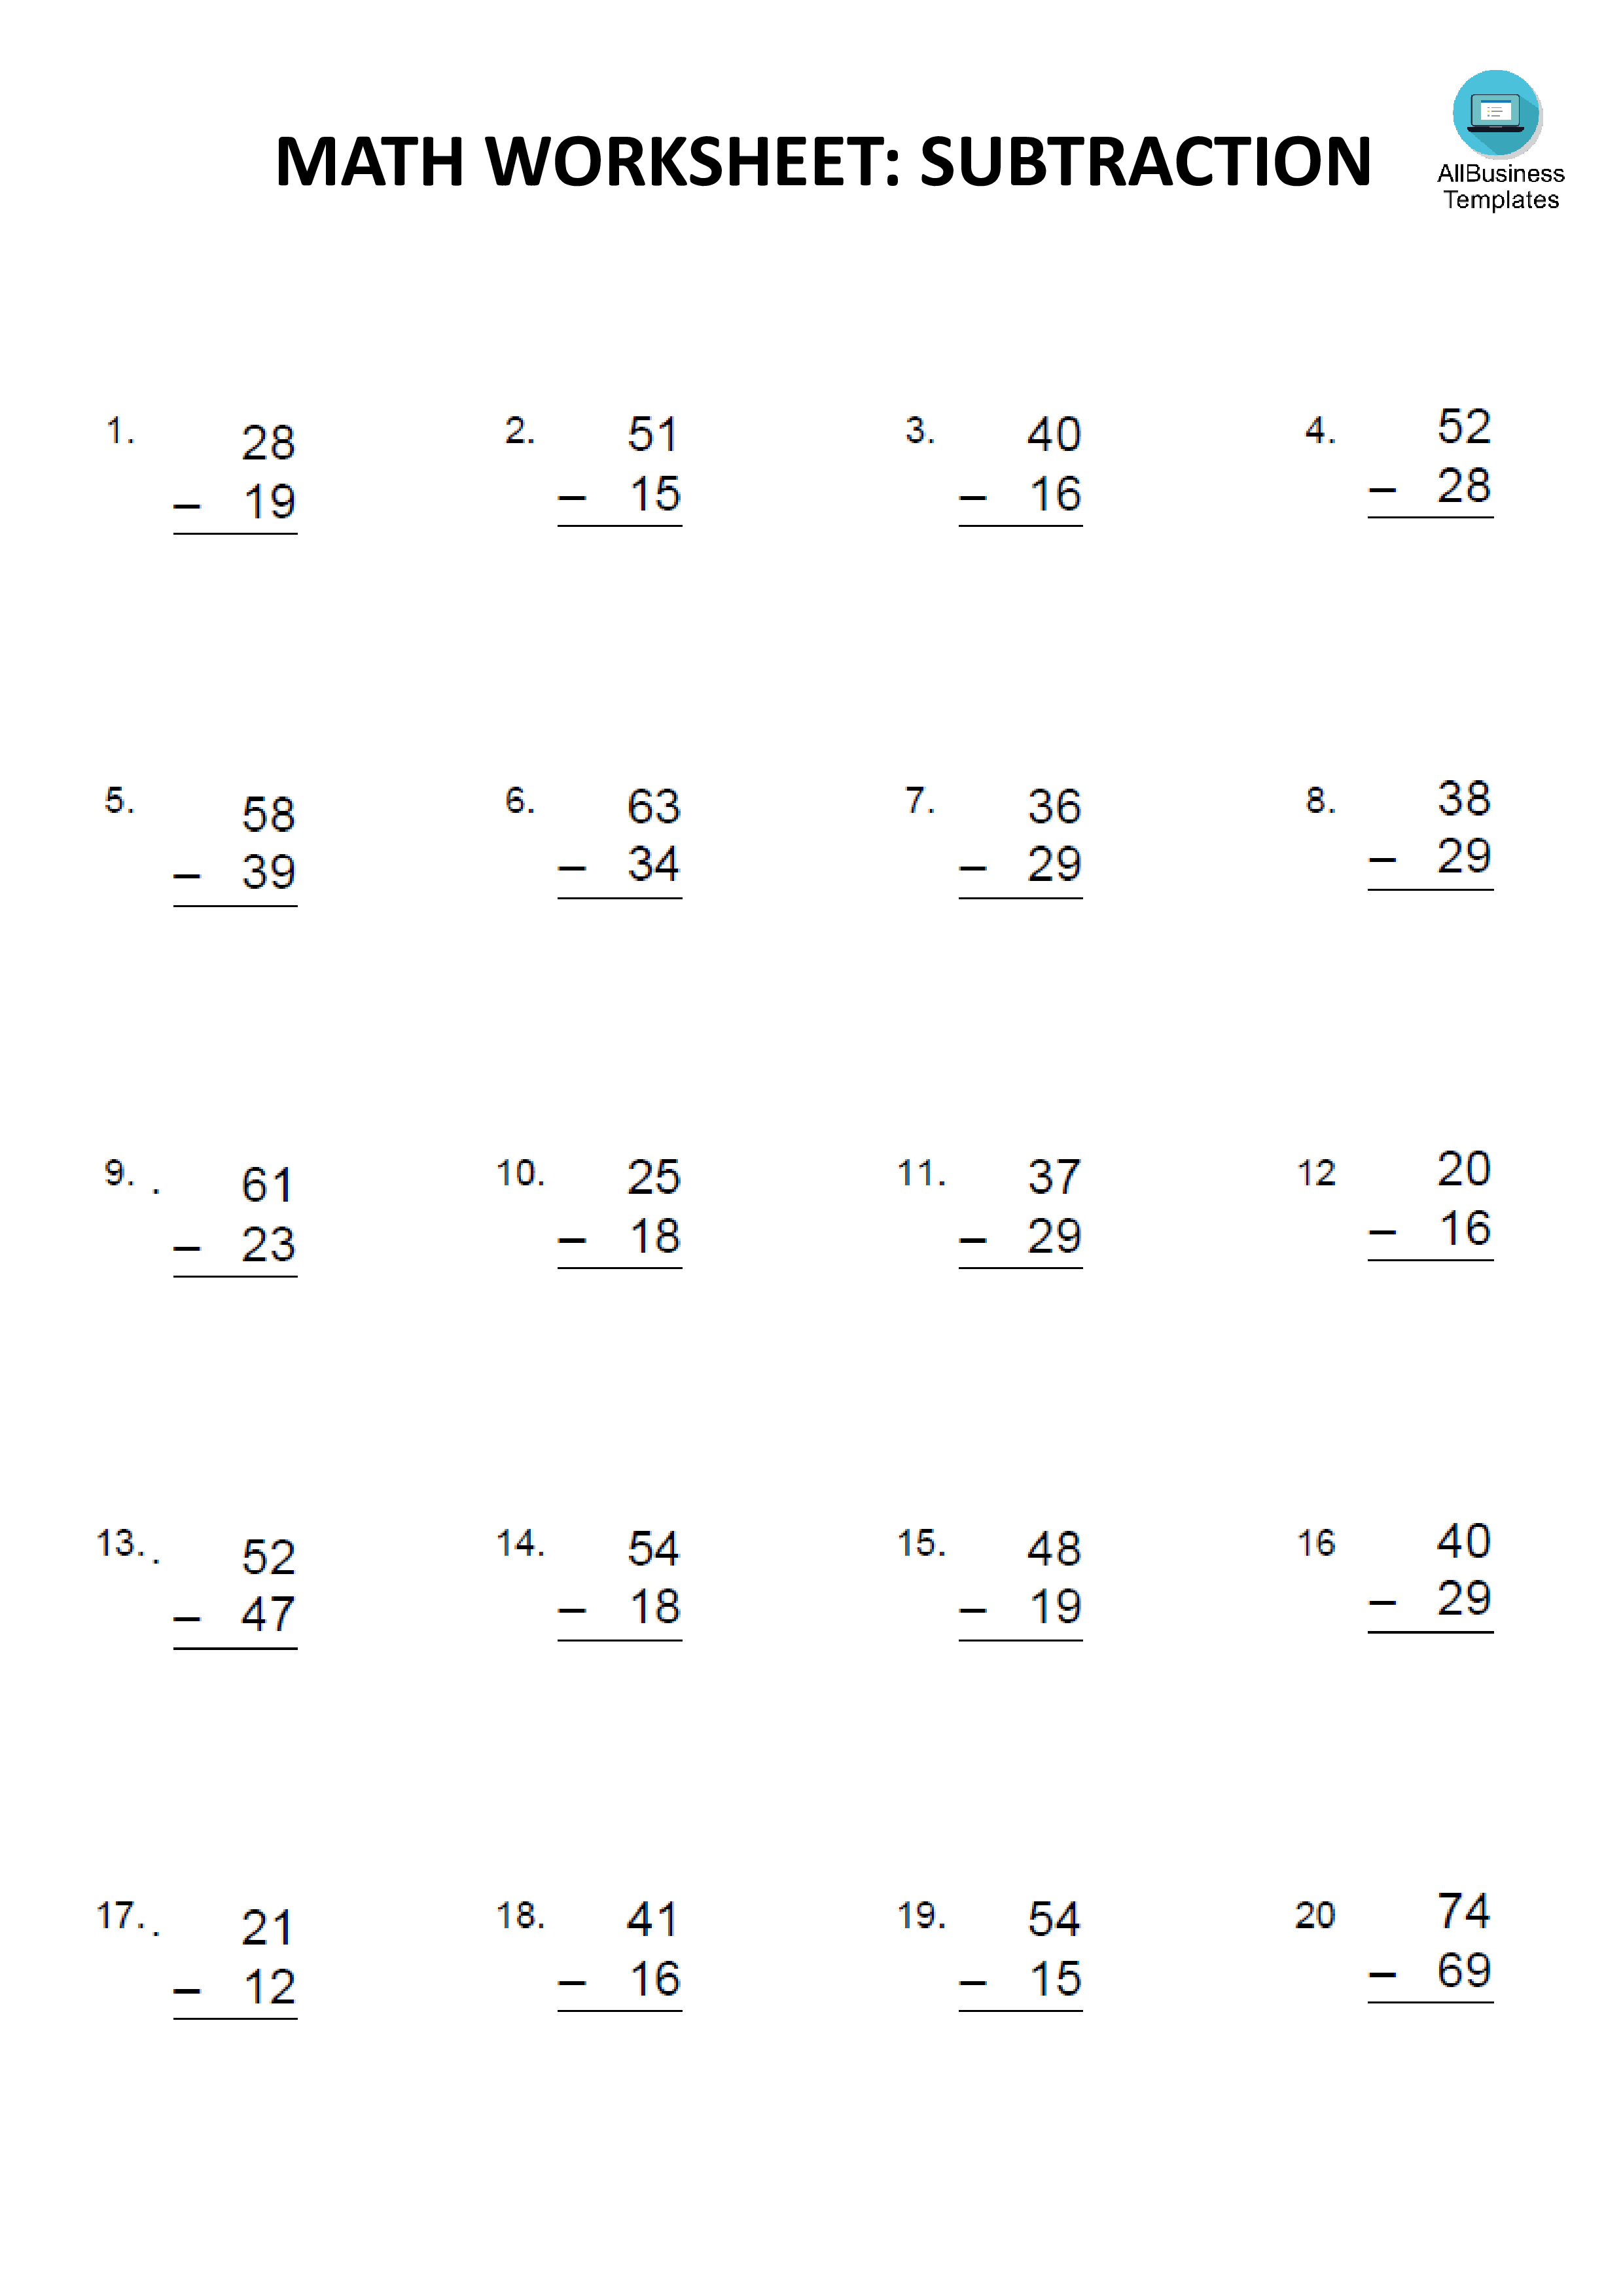 Mathematics Subtract Practicing Worksheet main image